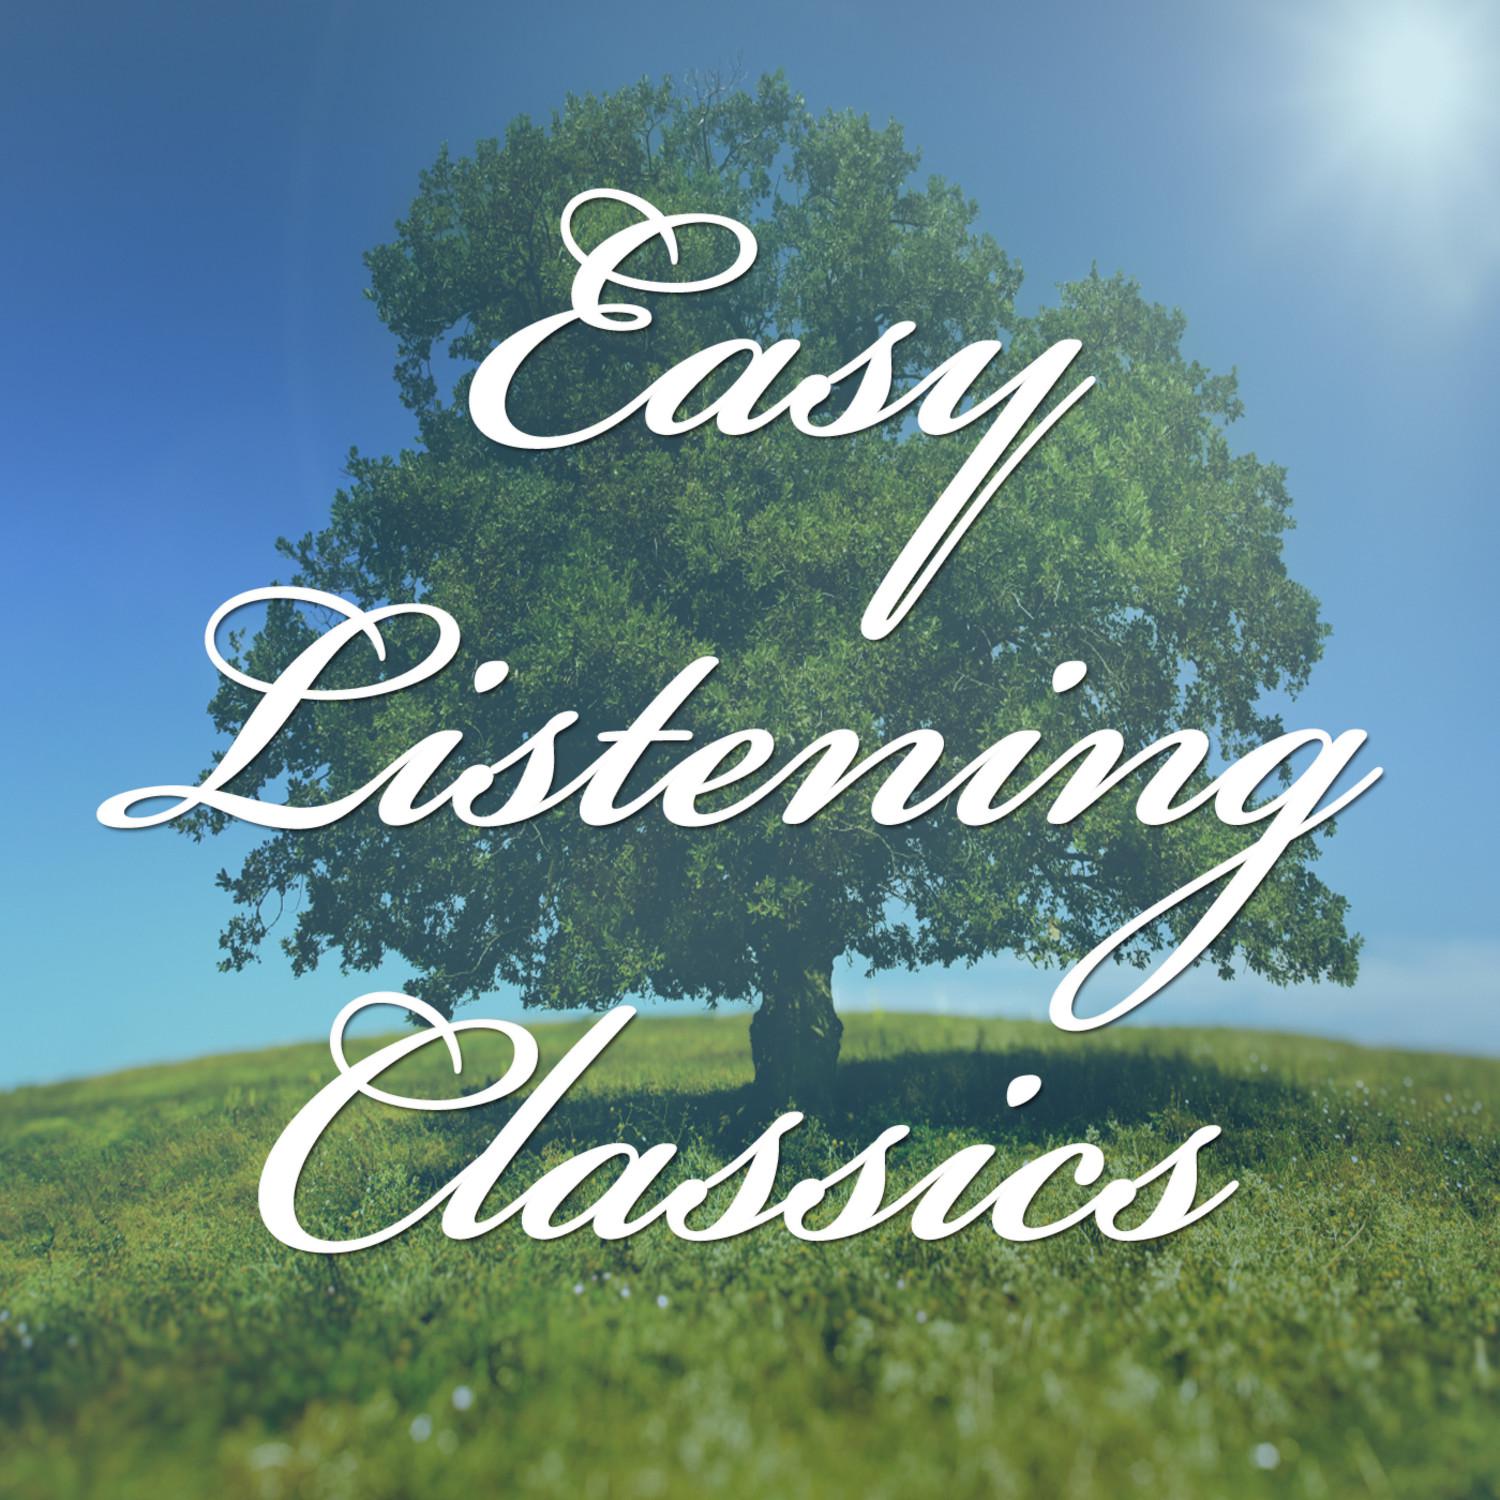 Easy Listening Classics